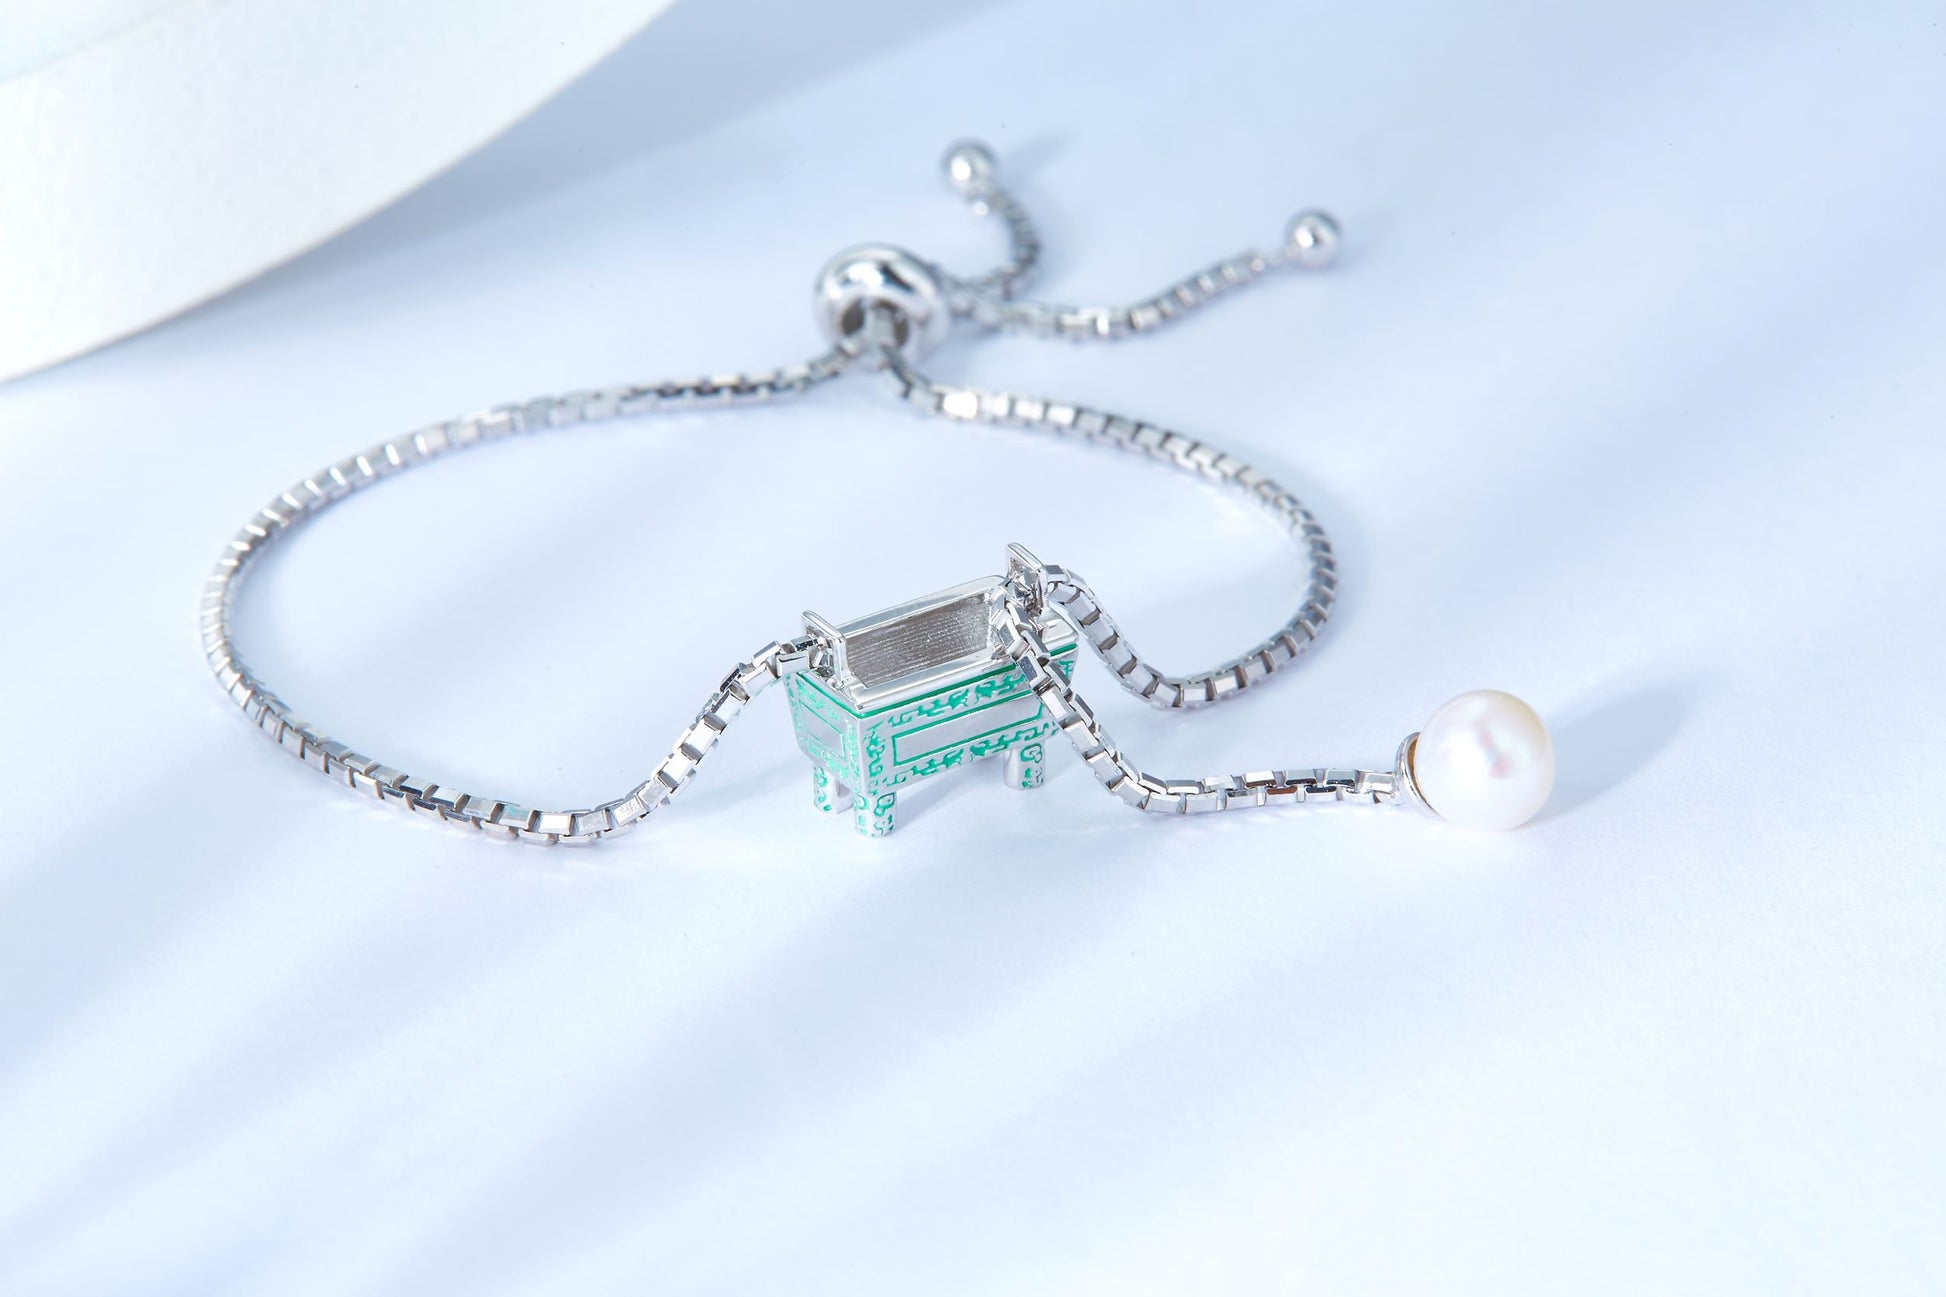 Quadripod Ding Enamel with Pearl Silver Bracelet for Women